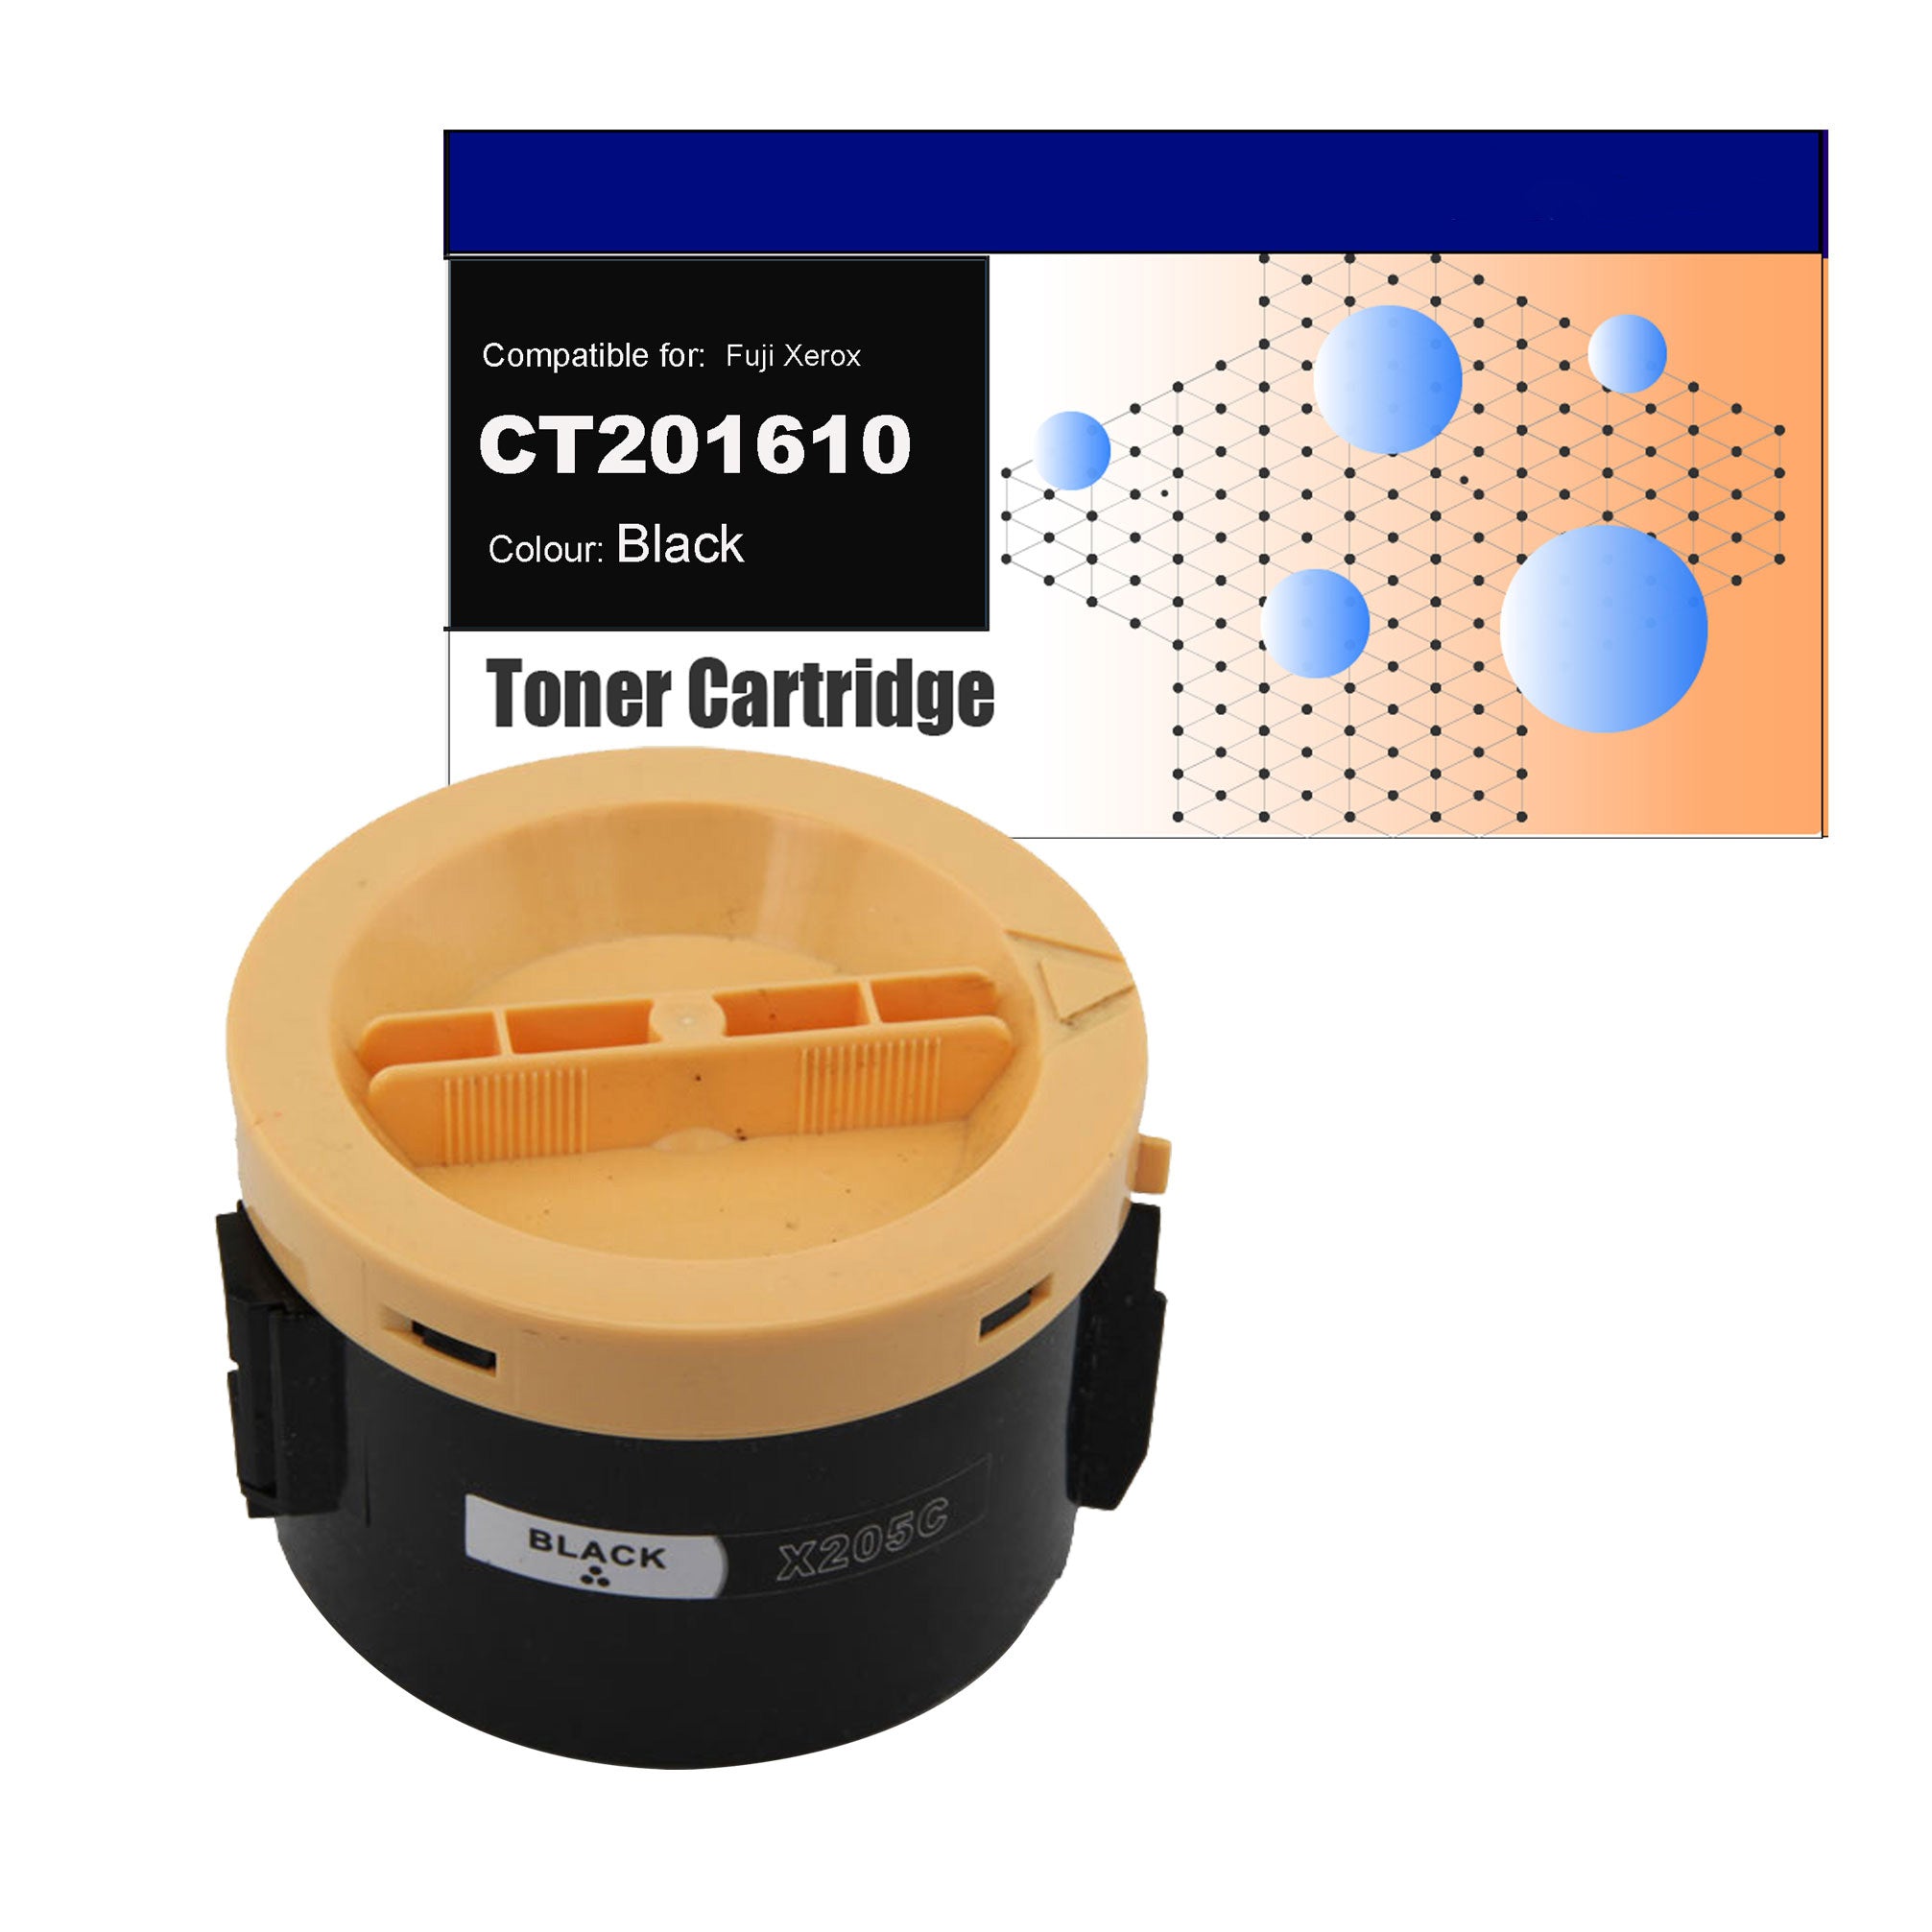 Compatible Tonerfor Fuji Xerox CT201610 (M205B) black toner cartridges